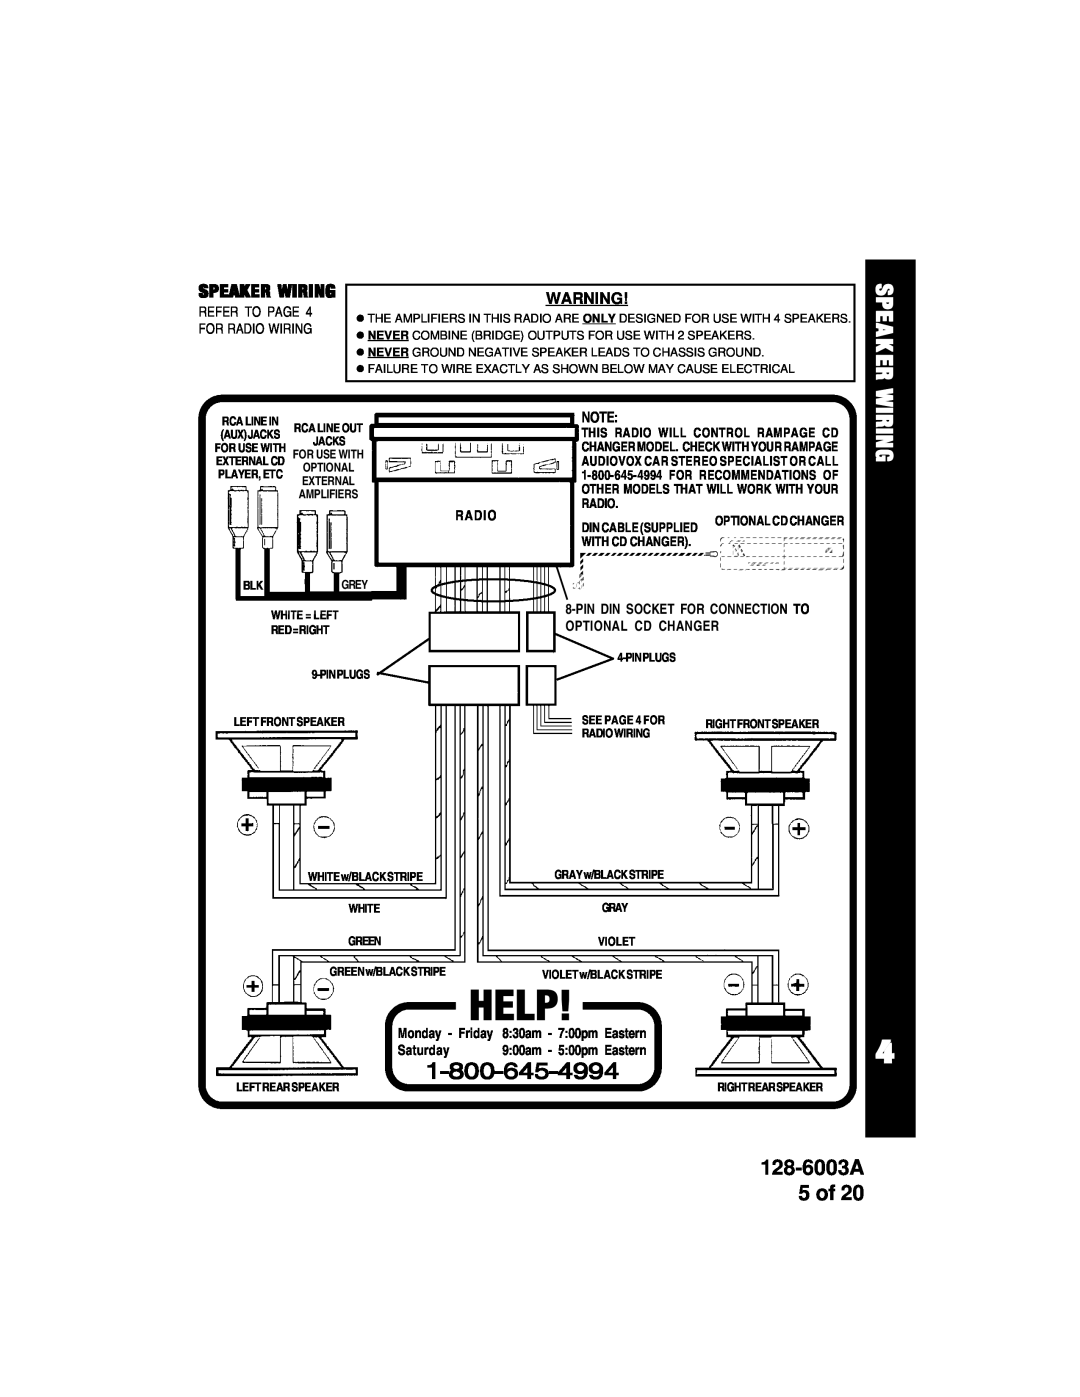 Audiovox ACD83 owner manual Speak Er Wiring, 128-6003A 5 of, Help, Speaker Wiring, Radio, With Cd Changer 